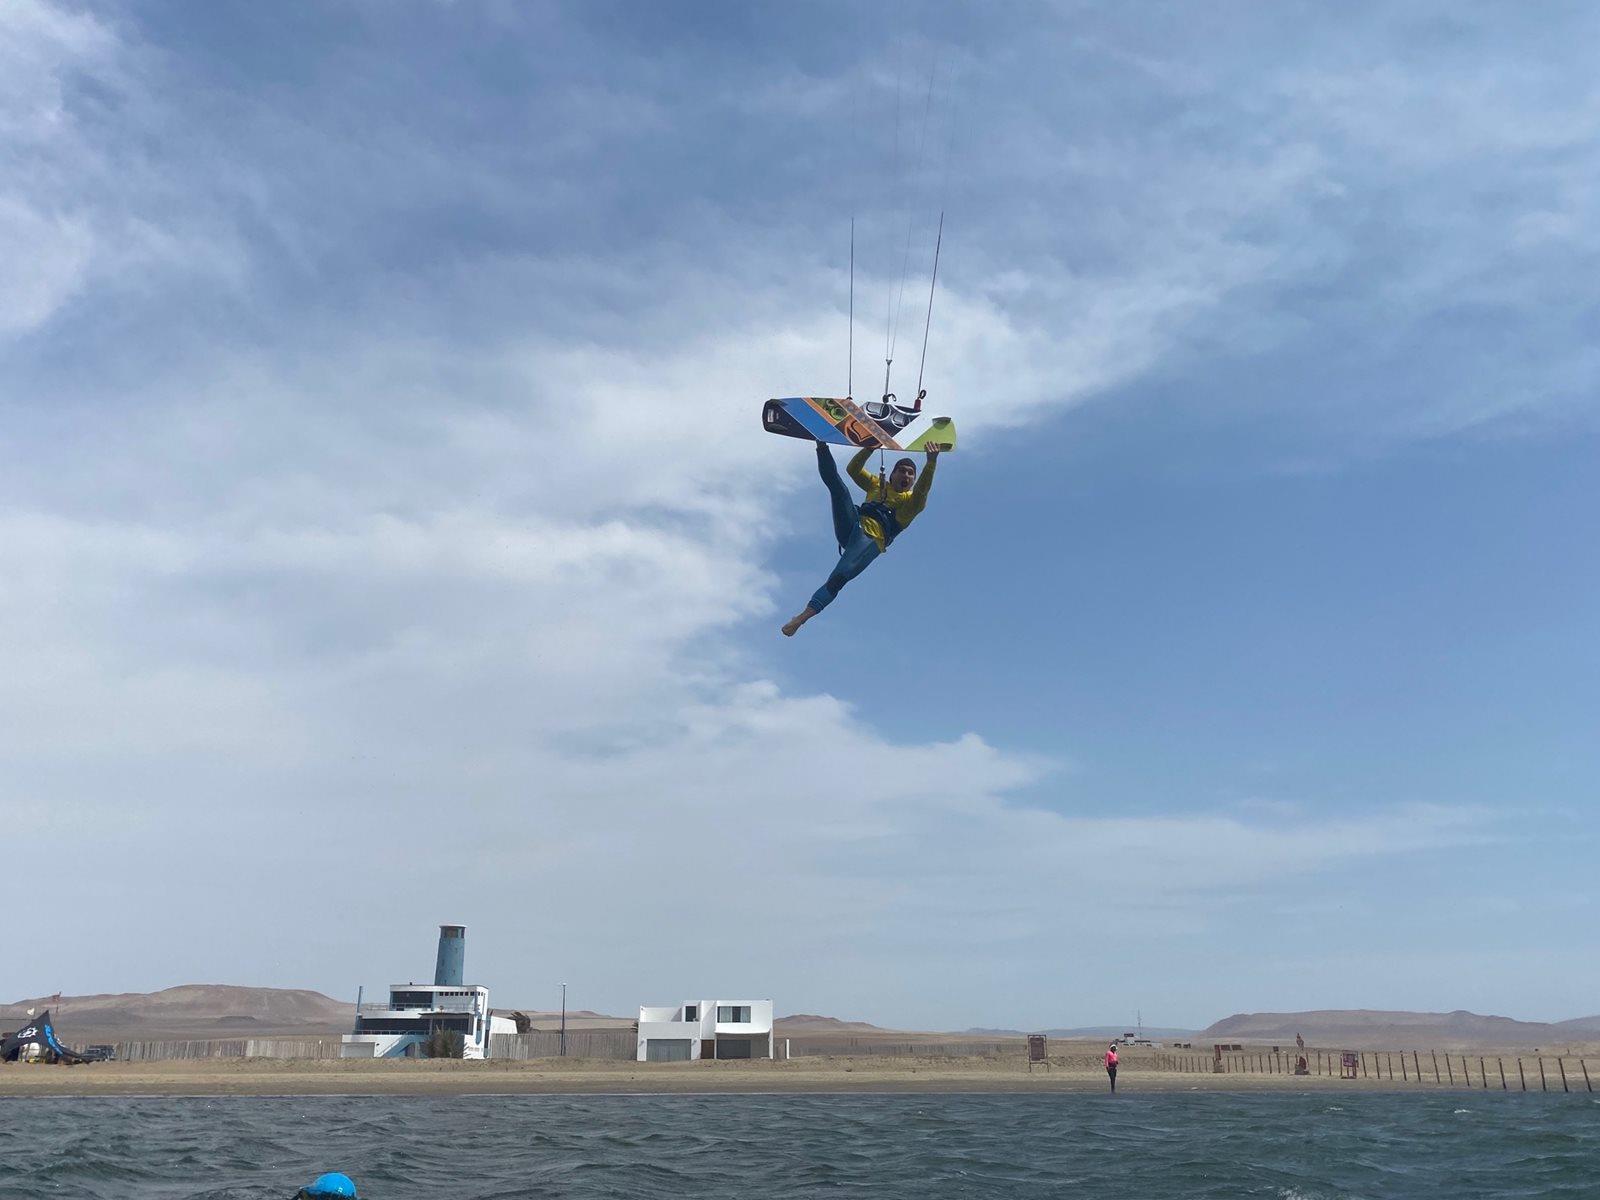 kite spot Peru Paracas south America - onefoot board off kieloop